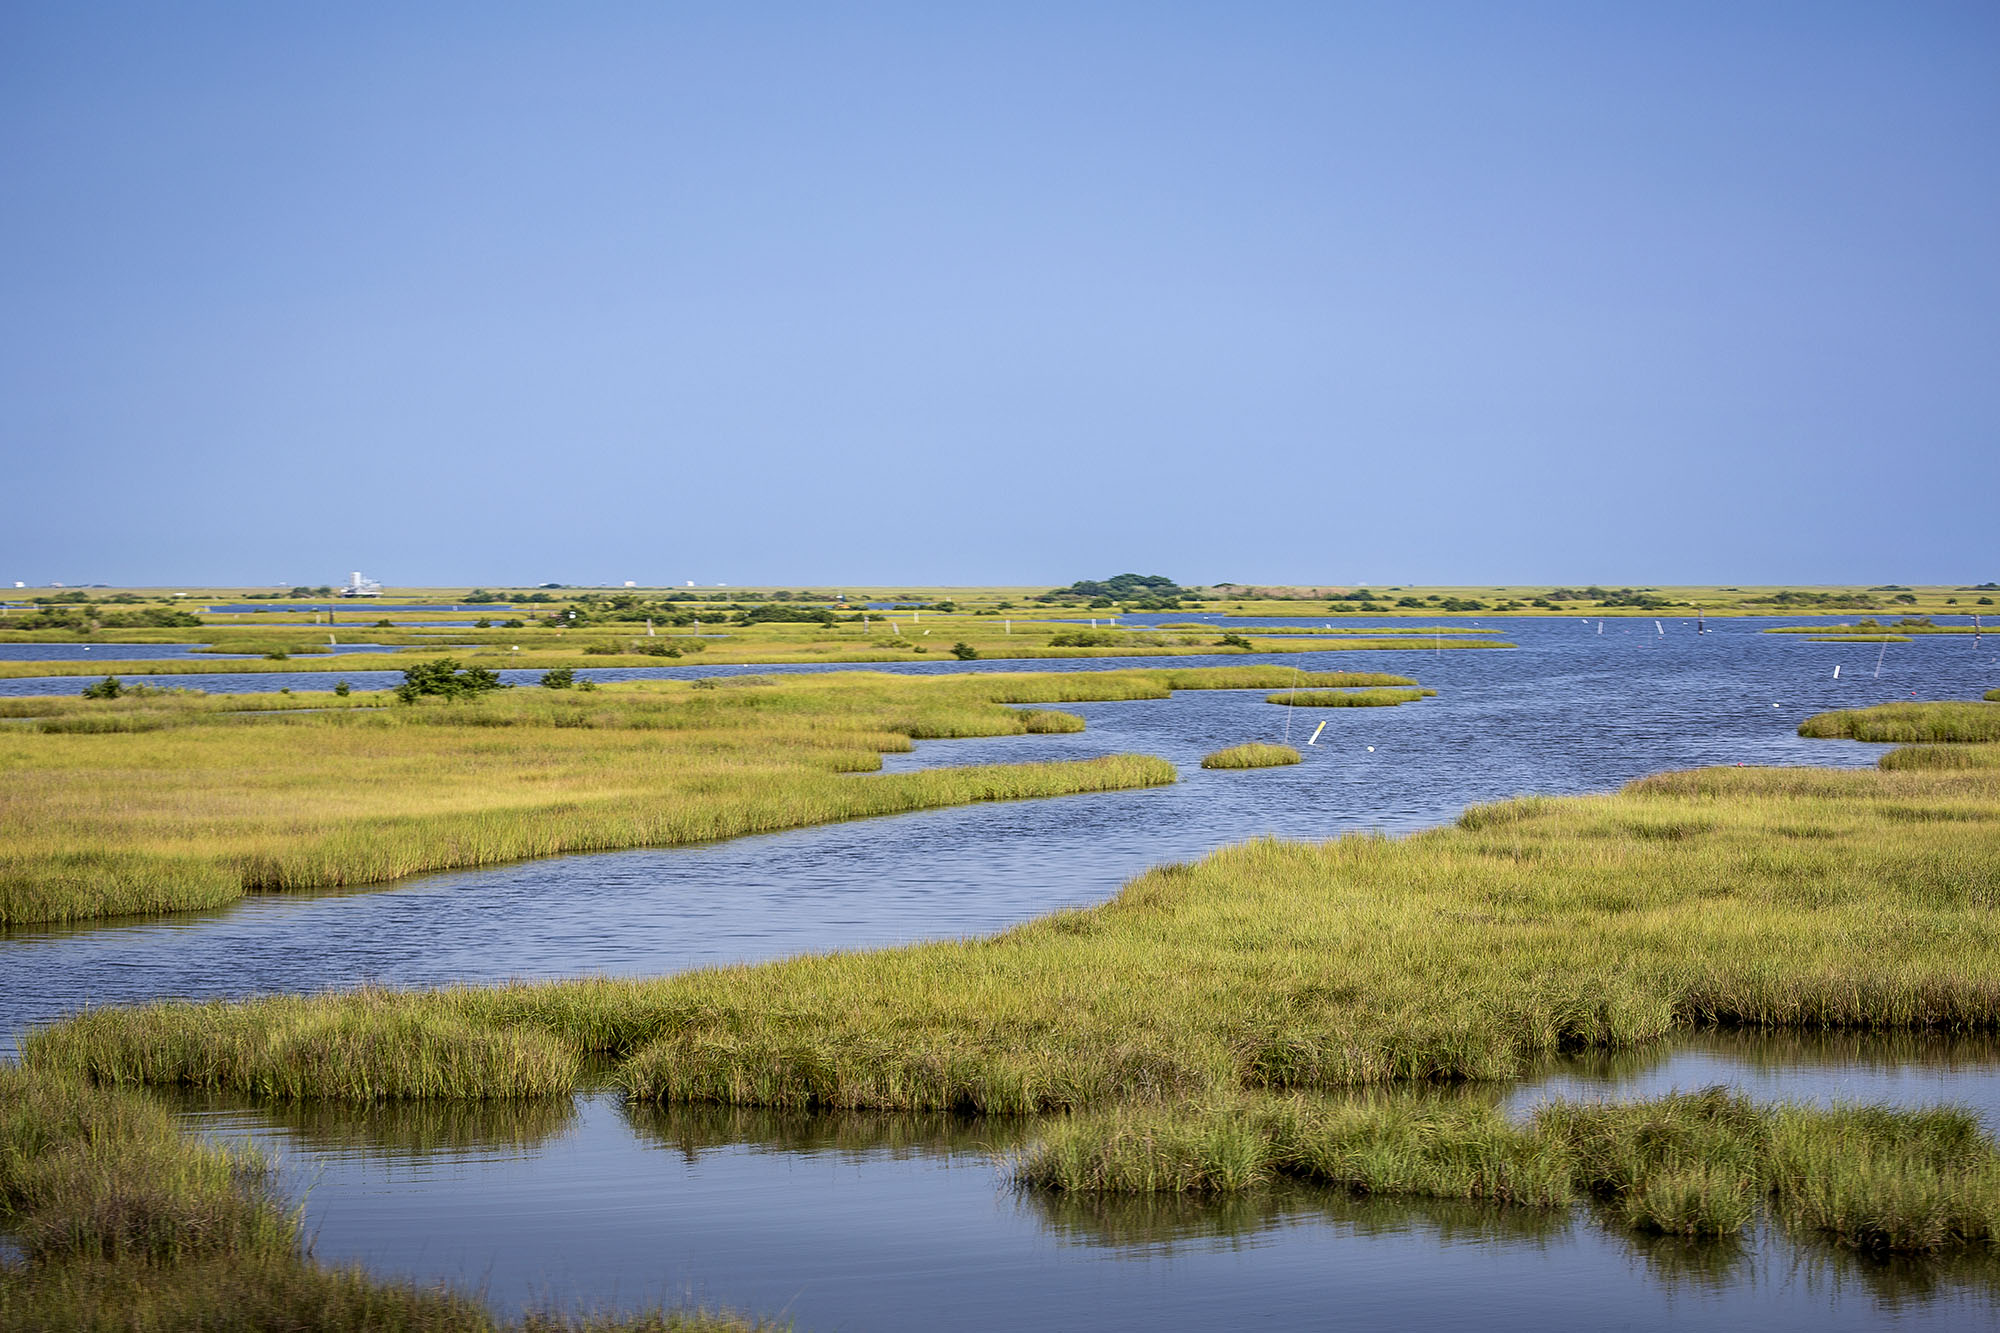 Scene of marshland on the Louisiana coast